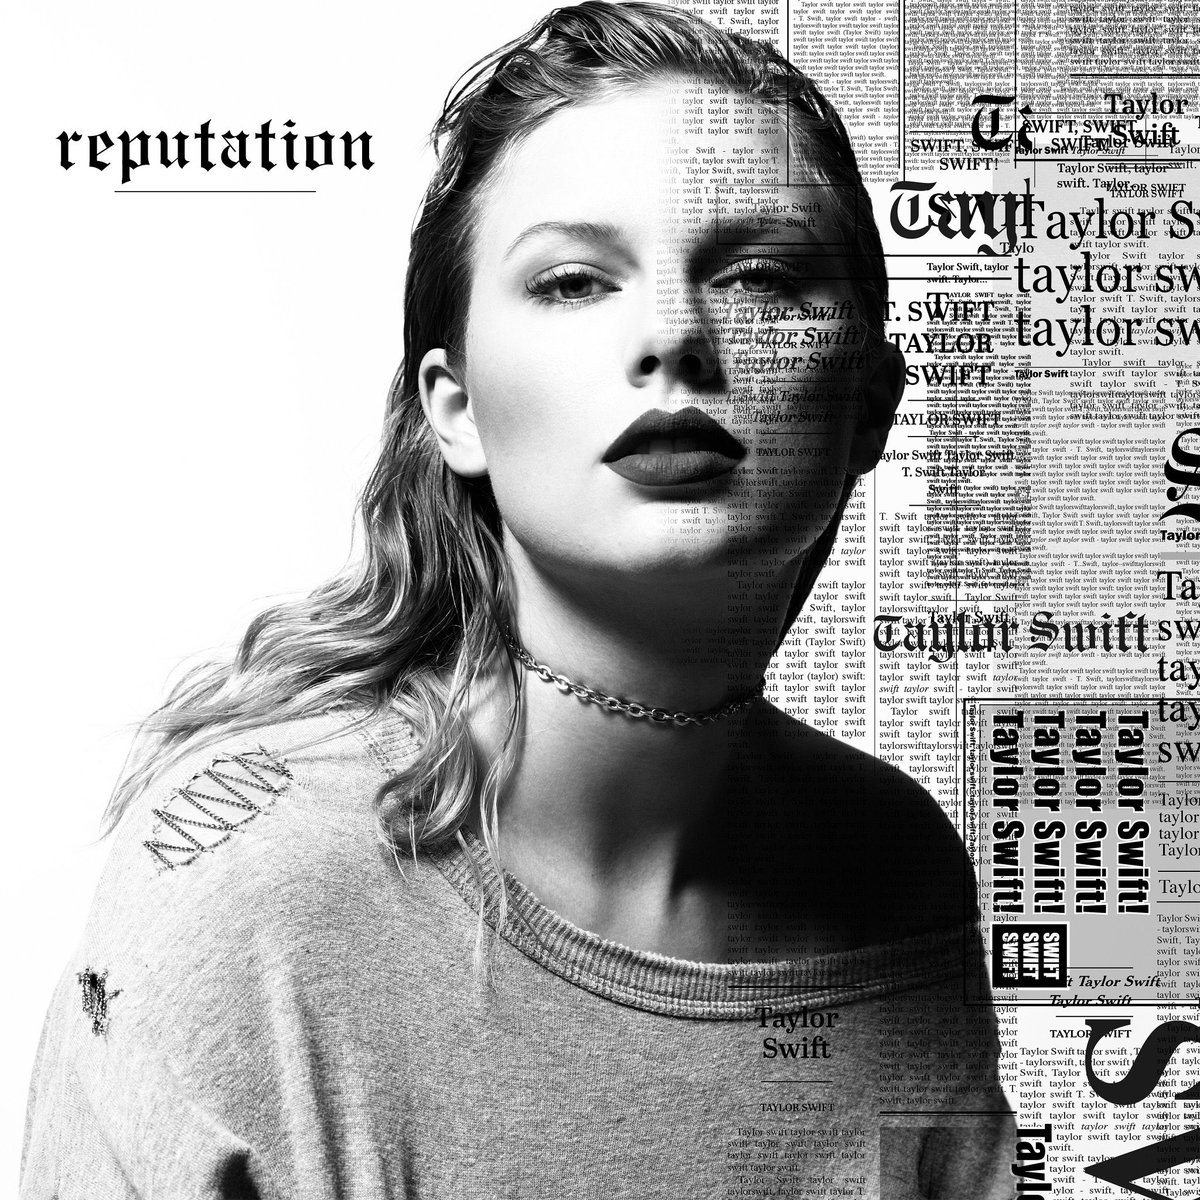 reputation (2017) by Taylor Swift

อัลบั้มแนว Electropop ซึ่งเรายกให้เป็นอัลบั้มที่งาน Production บีท+ดนตรีดีที่สุดของ Taylor ในตอนนี้ เป็นอัลบั้มที่ครบทุกรสชาติ ทุกอารมณ์ และสามารถสื่อสารออกมาผ่านเพลงได้ชัดเจนทุกอย่าง ทั้งความโกรธ ความเกลียด ความเศร้า ความสุข และความรัก (1)